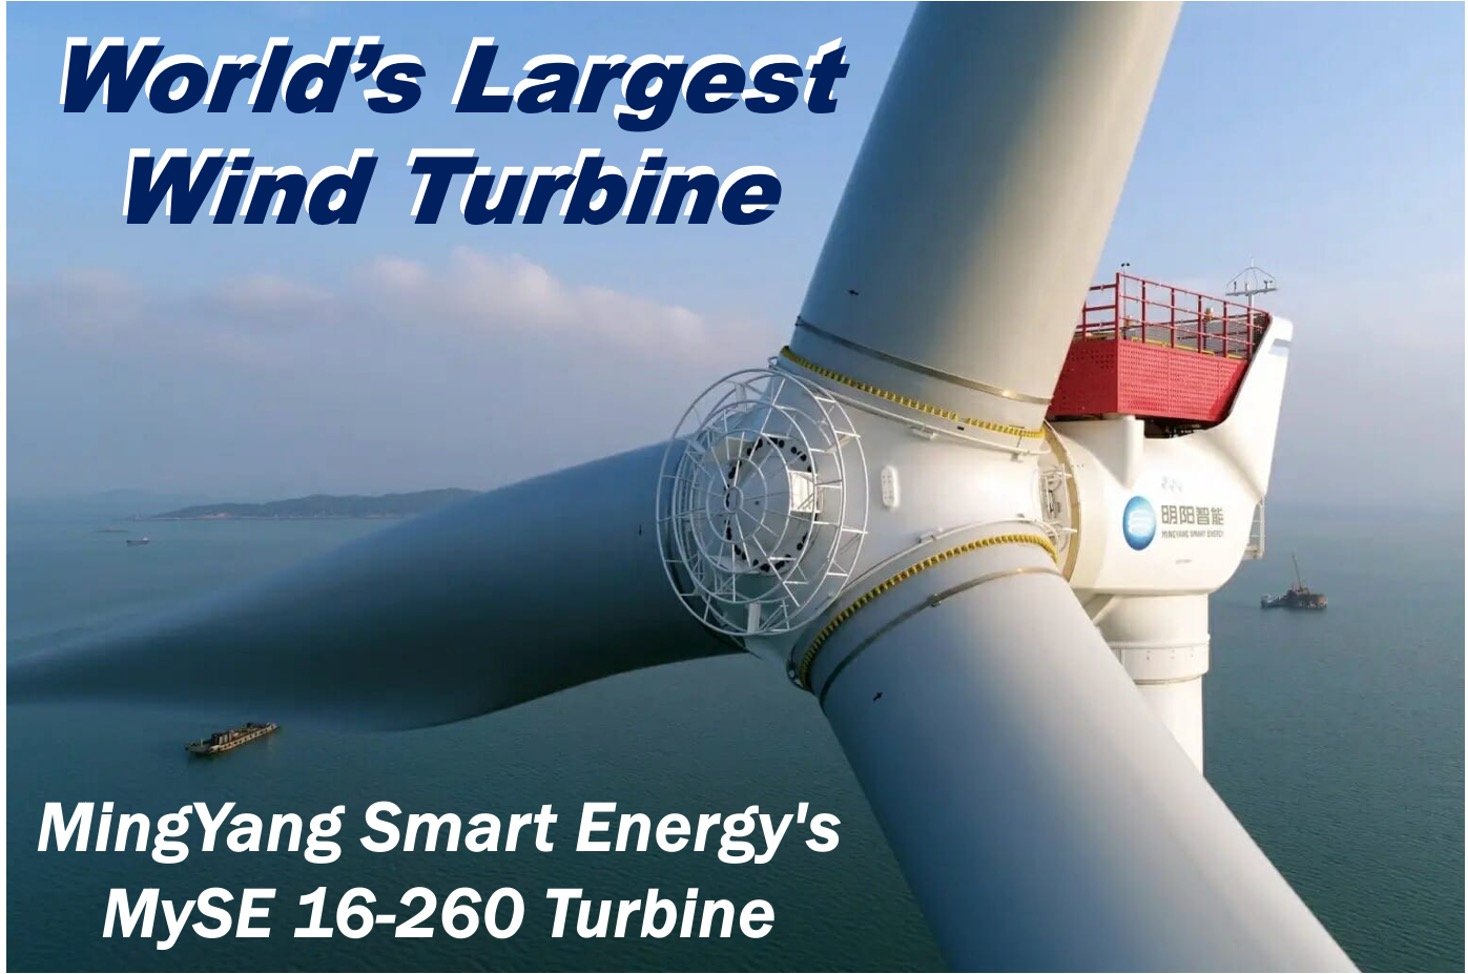 World's largest wind turbine photo